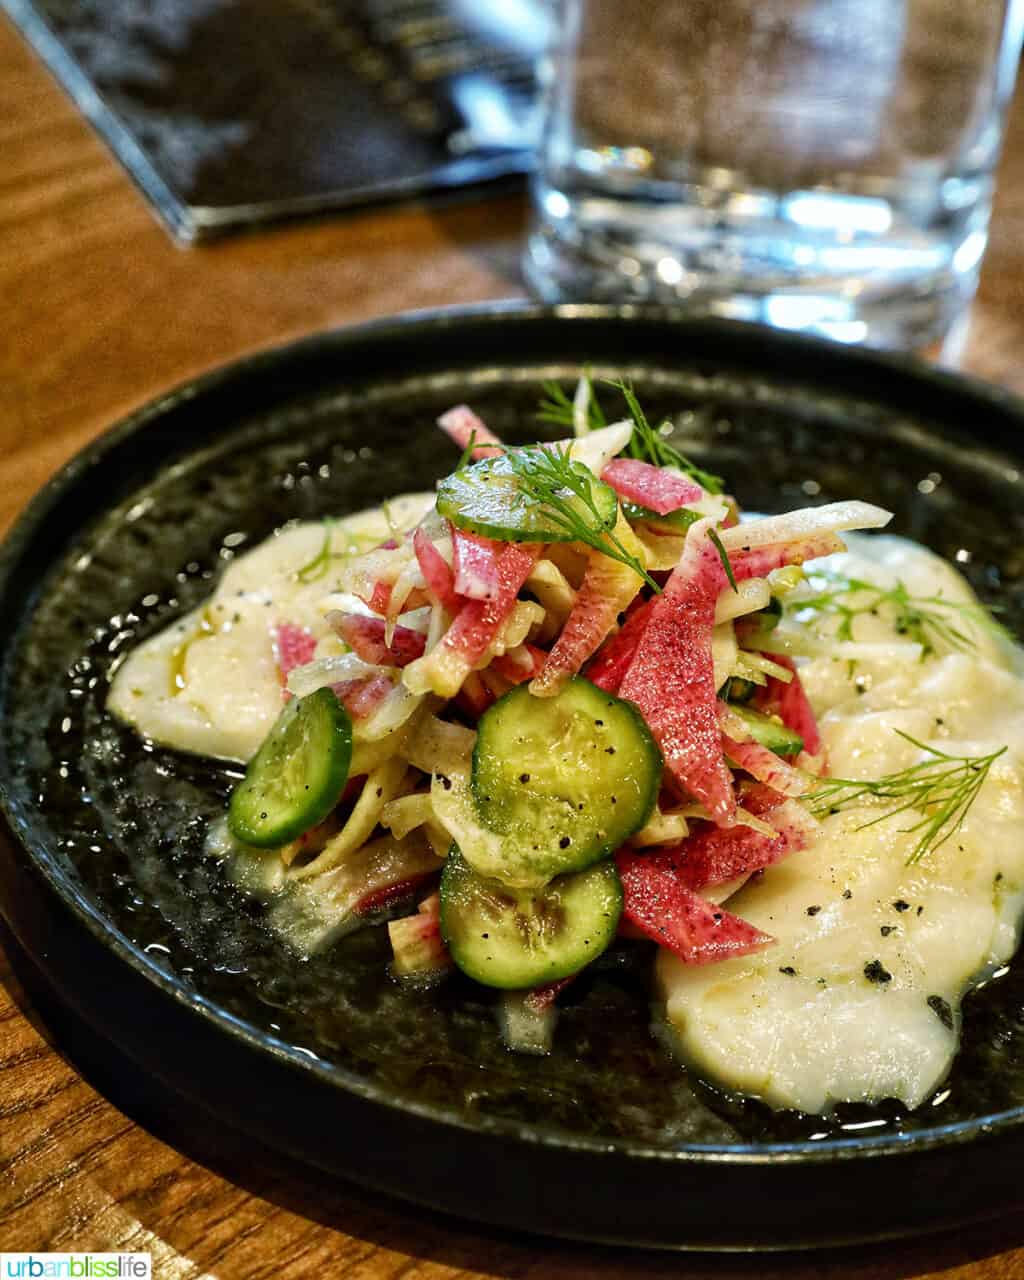 Tuna crudo with veggies on a dark plate.